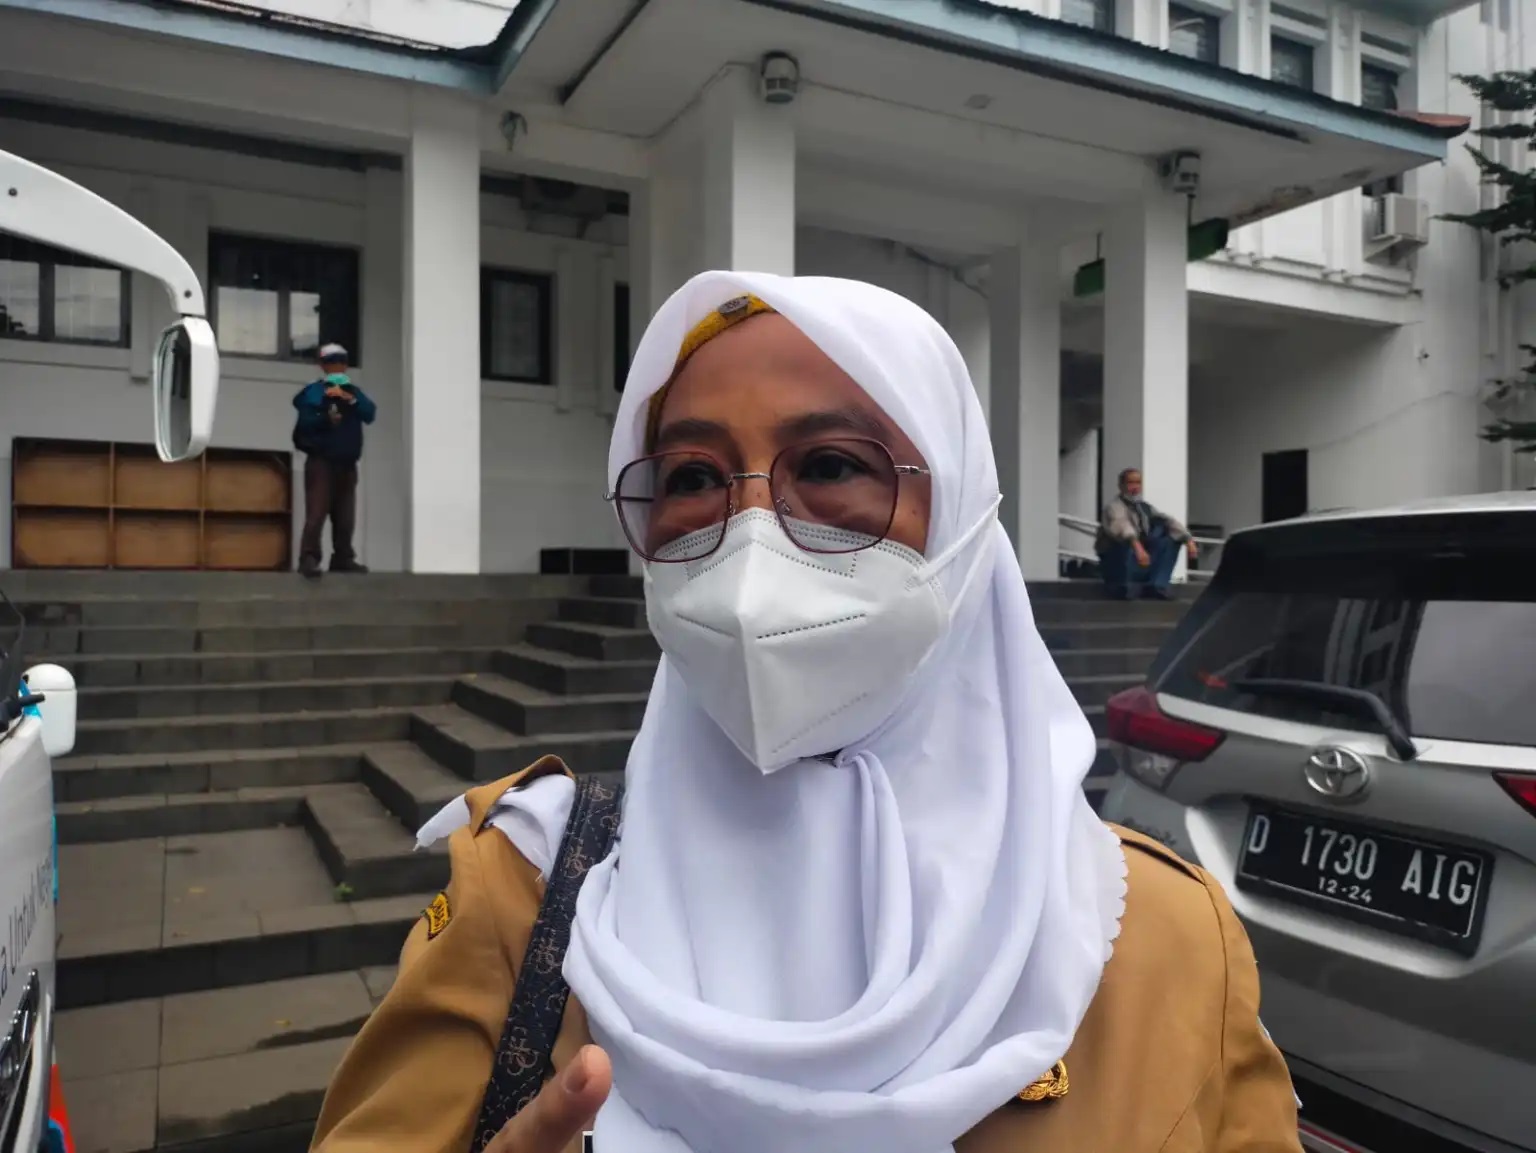 BERI KETERANGAN: Kepala Dinas Kesehatan Kota Bandung, Ahyani Raksanagara saat dimintai keterangan oleh awak media. JABAR EKSPRES